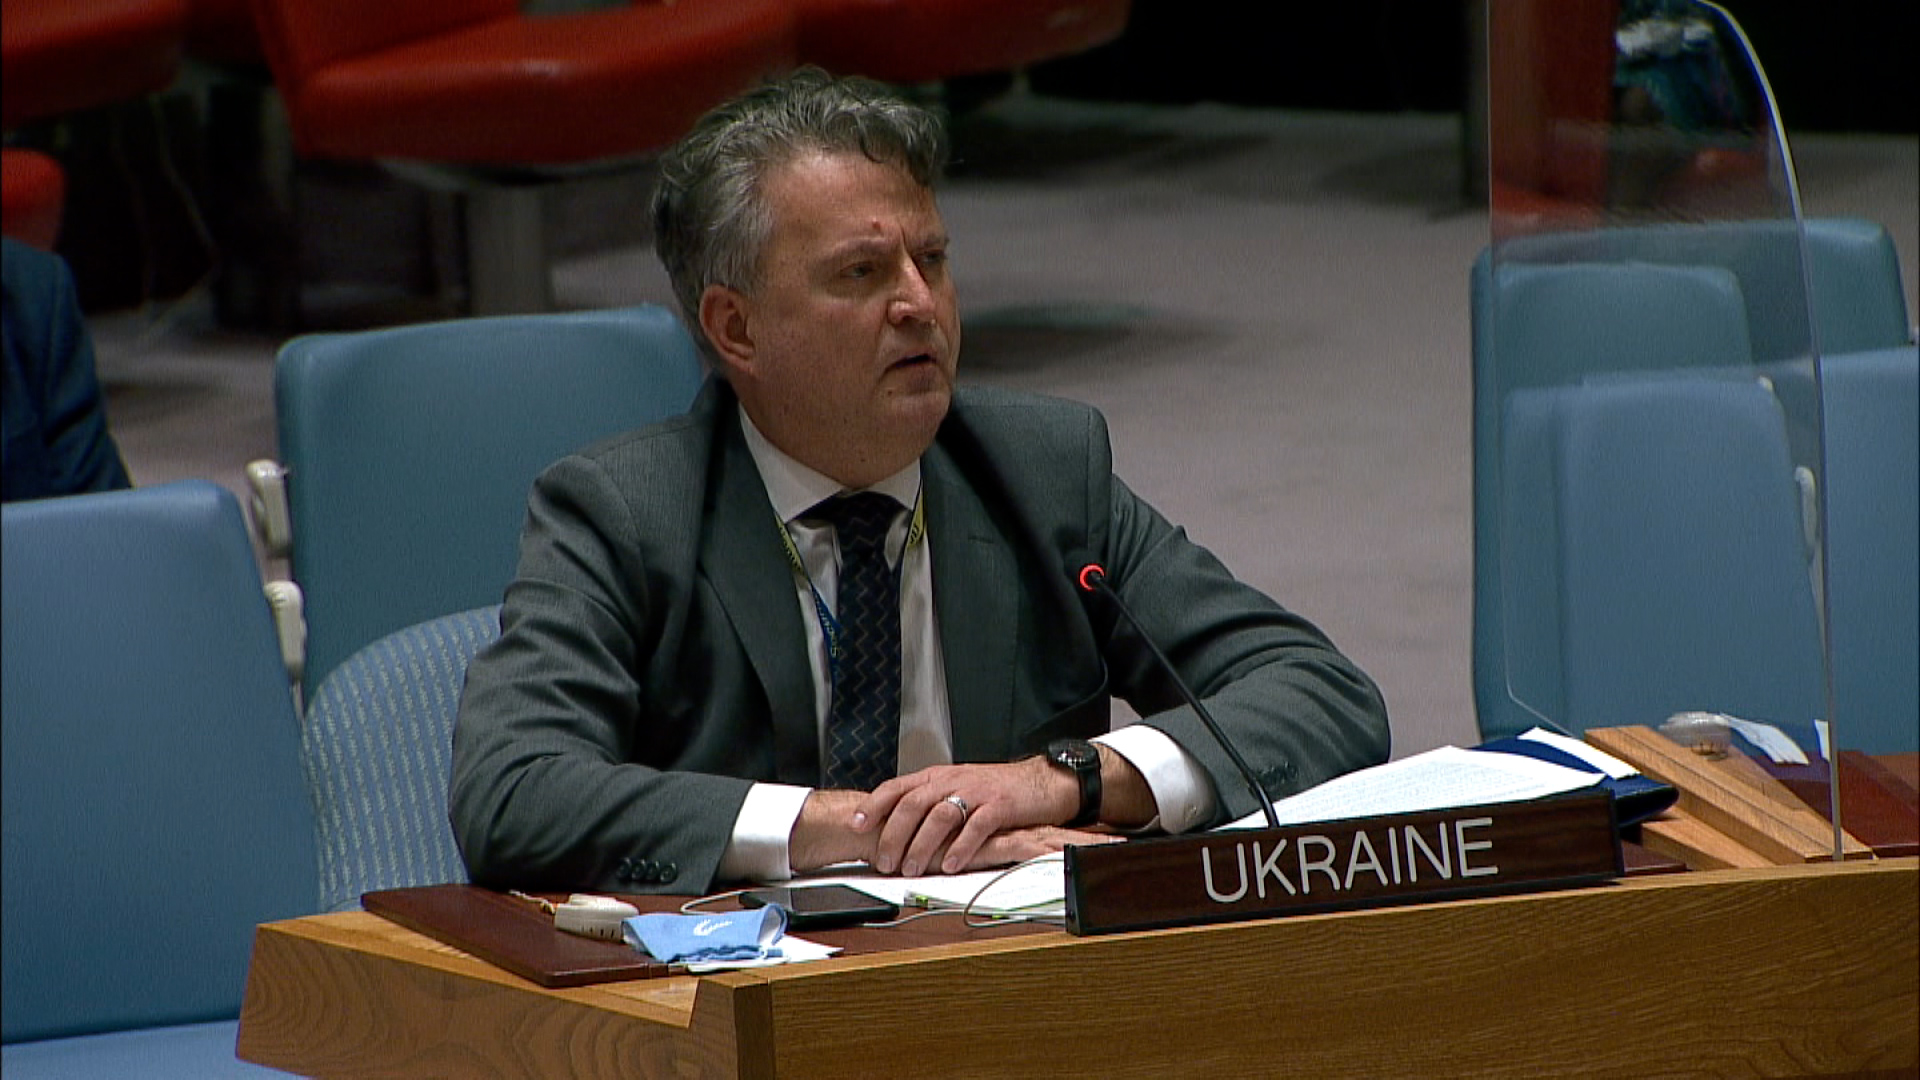 Ukrainian Ambassador to the UN Sergiy Kyslytsya